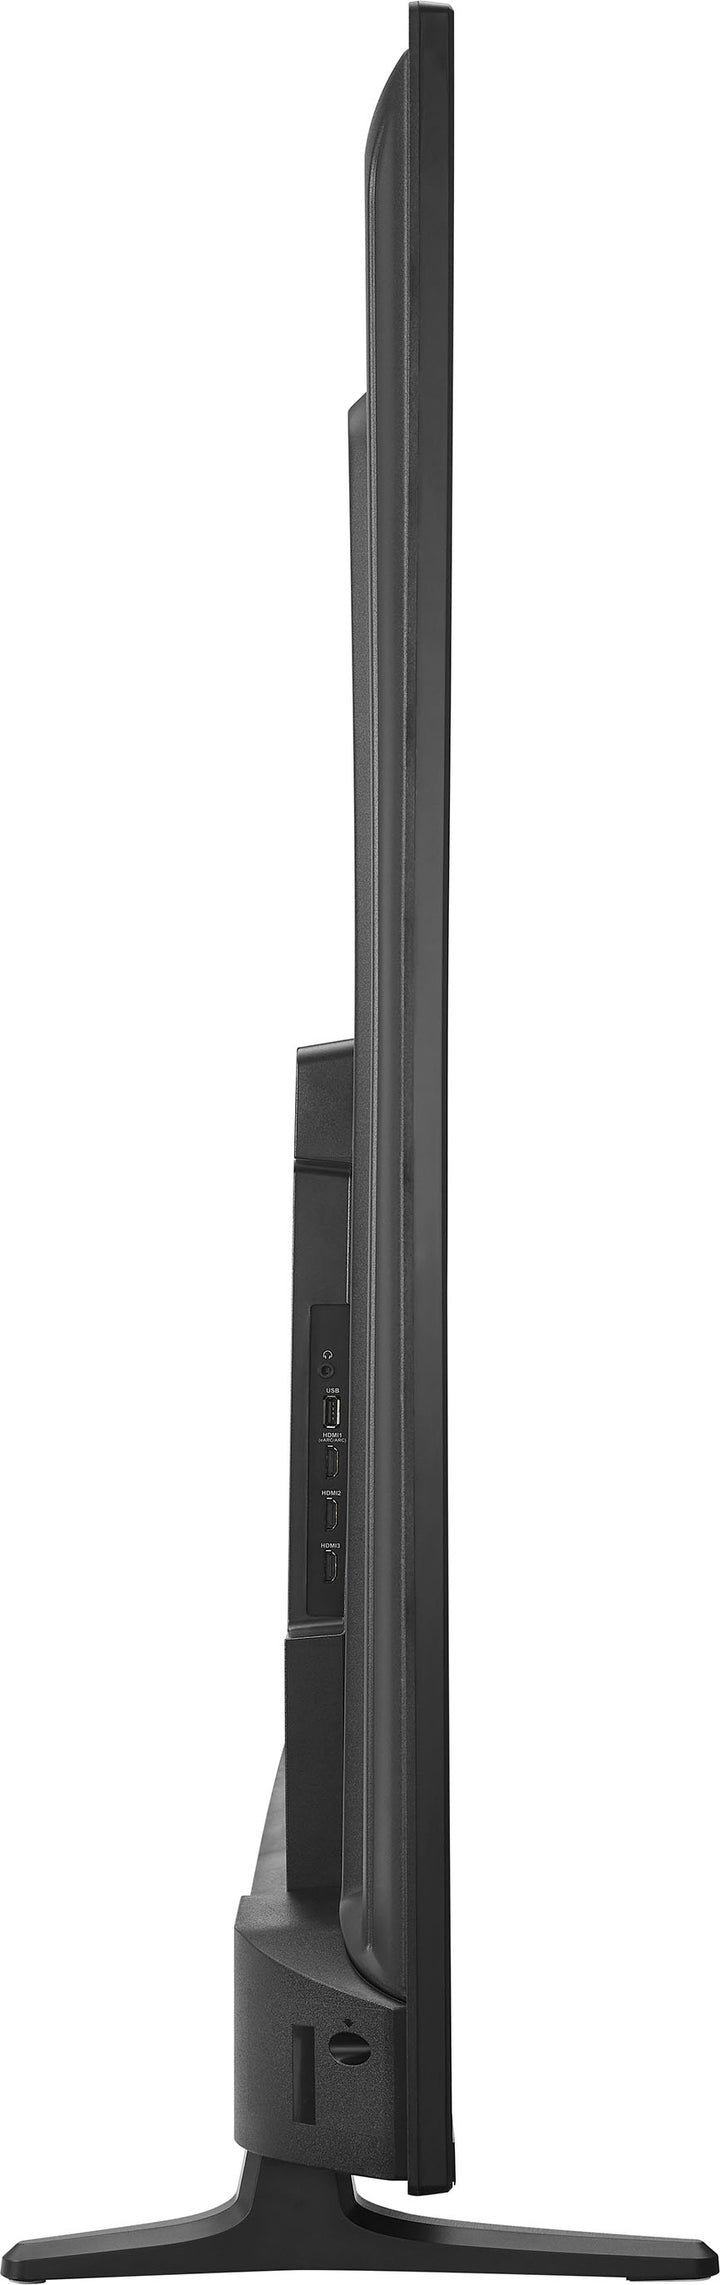 Insignia™ - 70" Class F30 Series LED 4K UHD Smart Fire TV_4